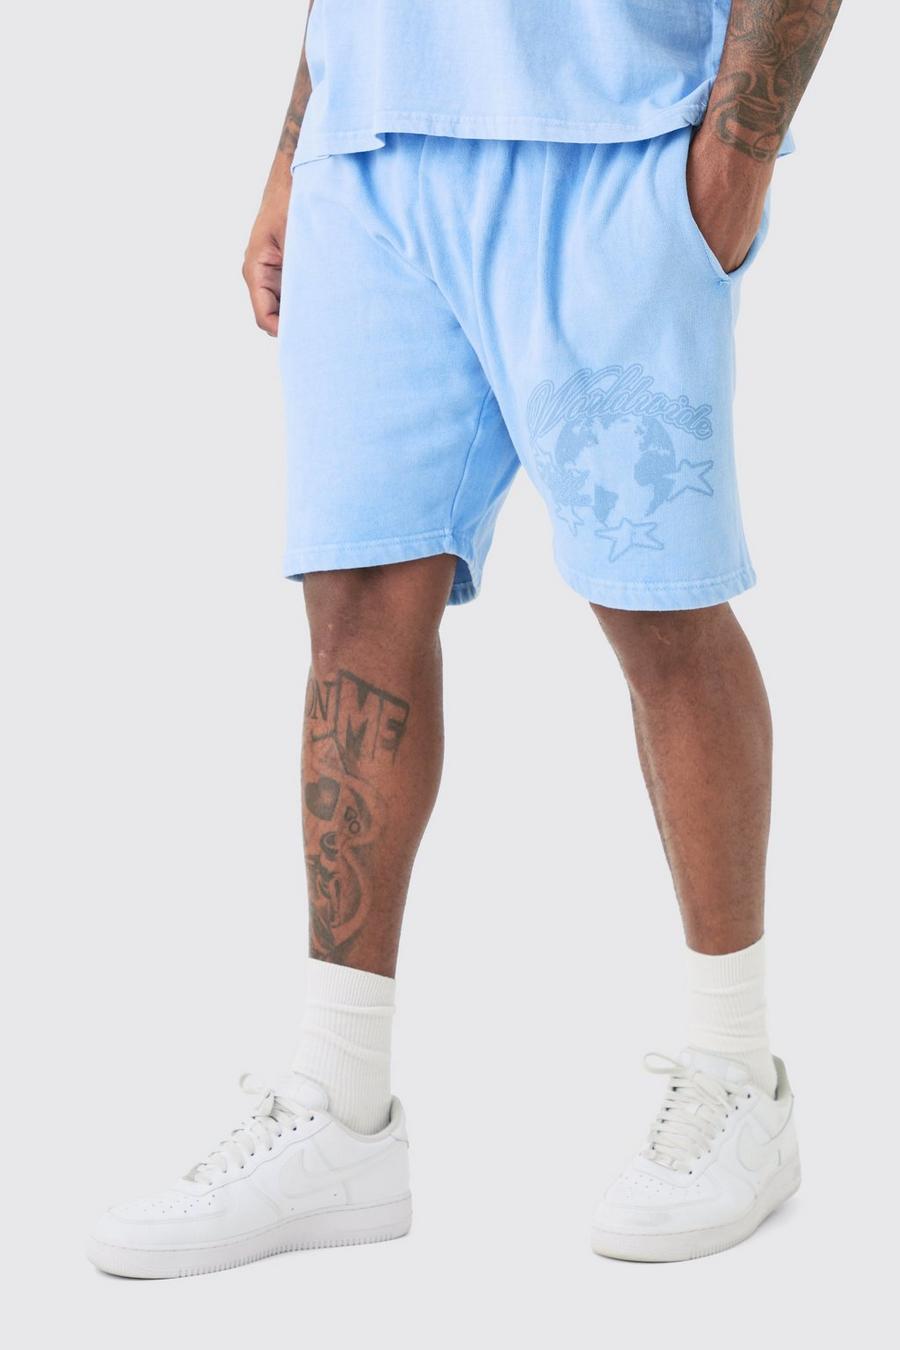 Pantalones cortos Plus oversize azules con estampado Dream Worldwide, Blue